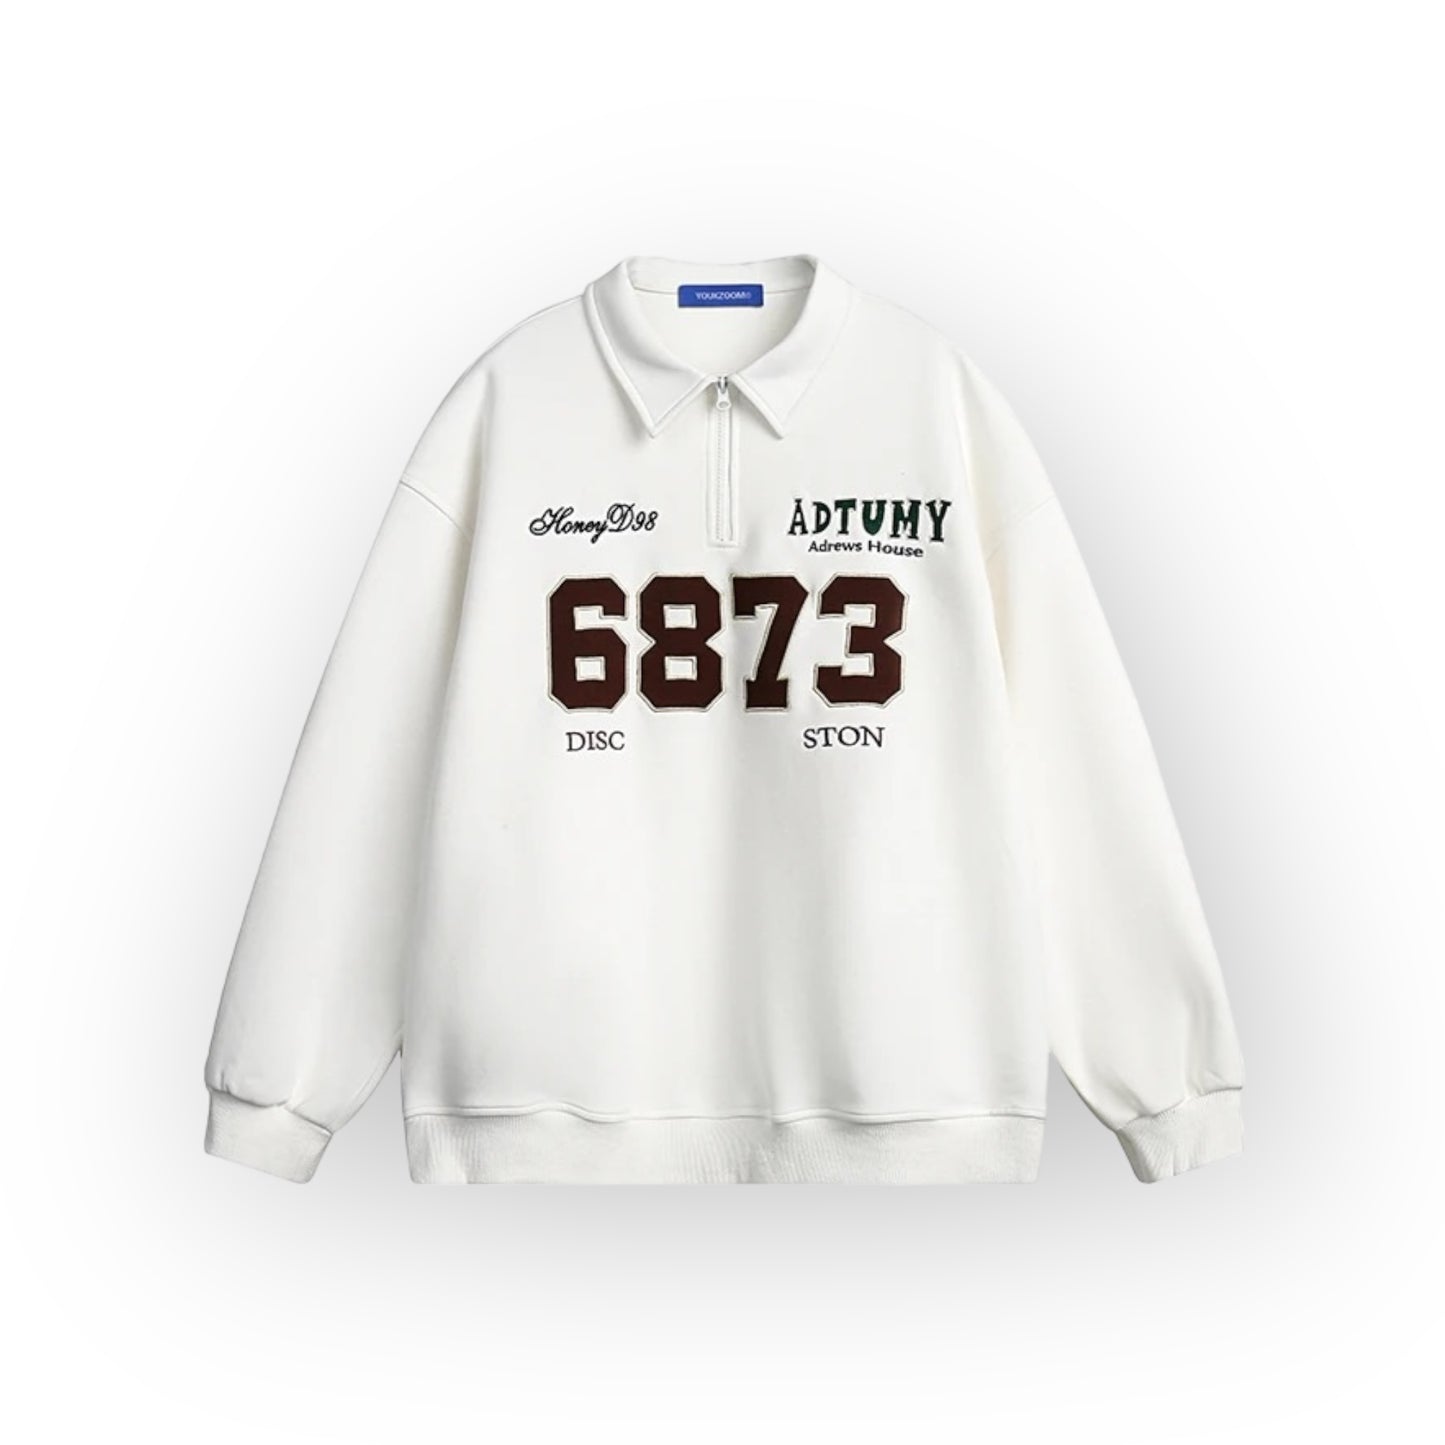 Youkzoom Number Embroid Sport Oversize Sweatshirt